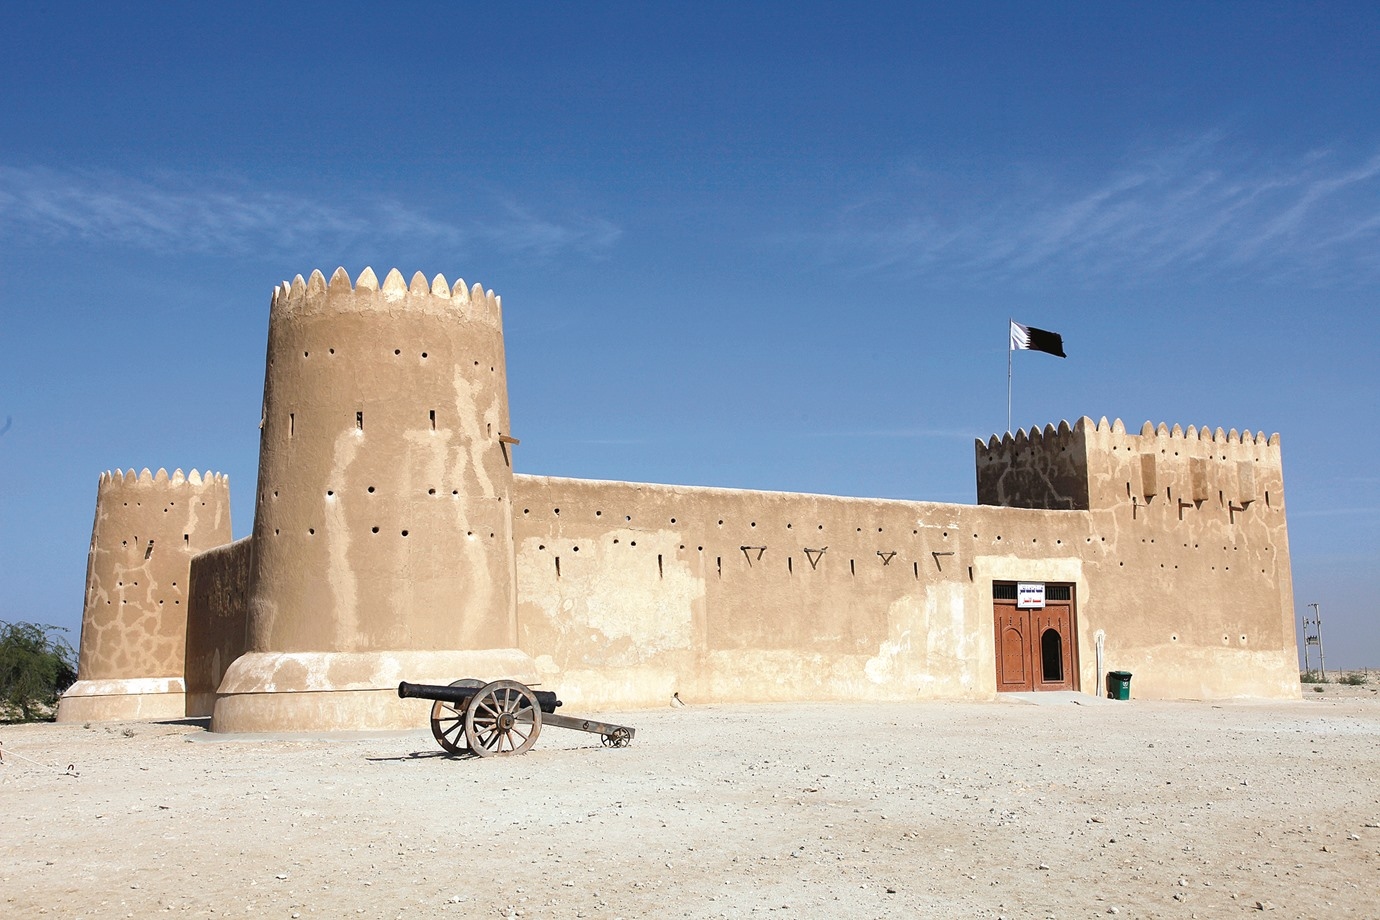 Al Wajbah Fort... A Landmark in Qatars History and Present